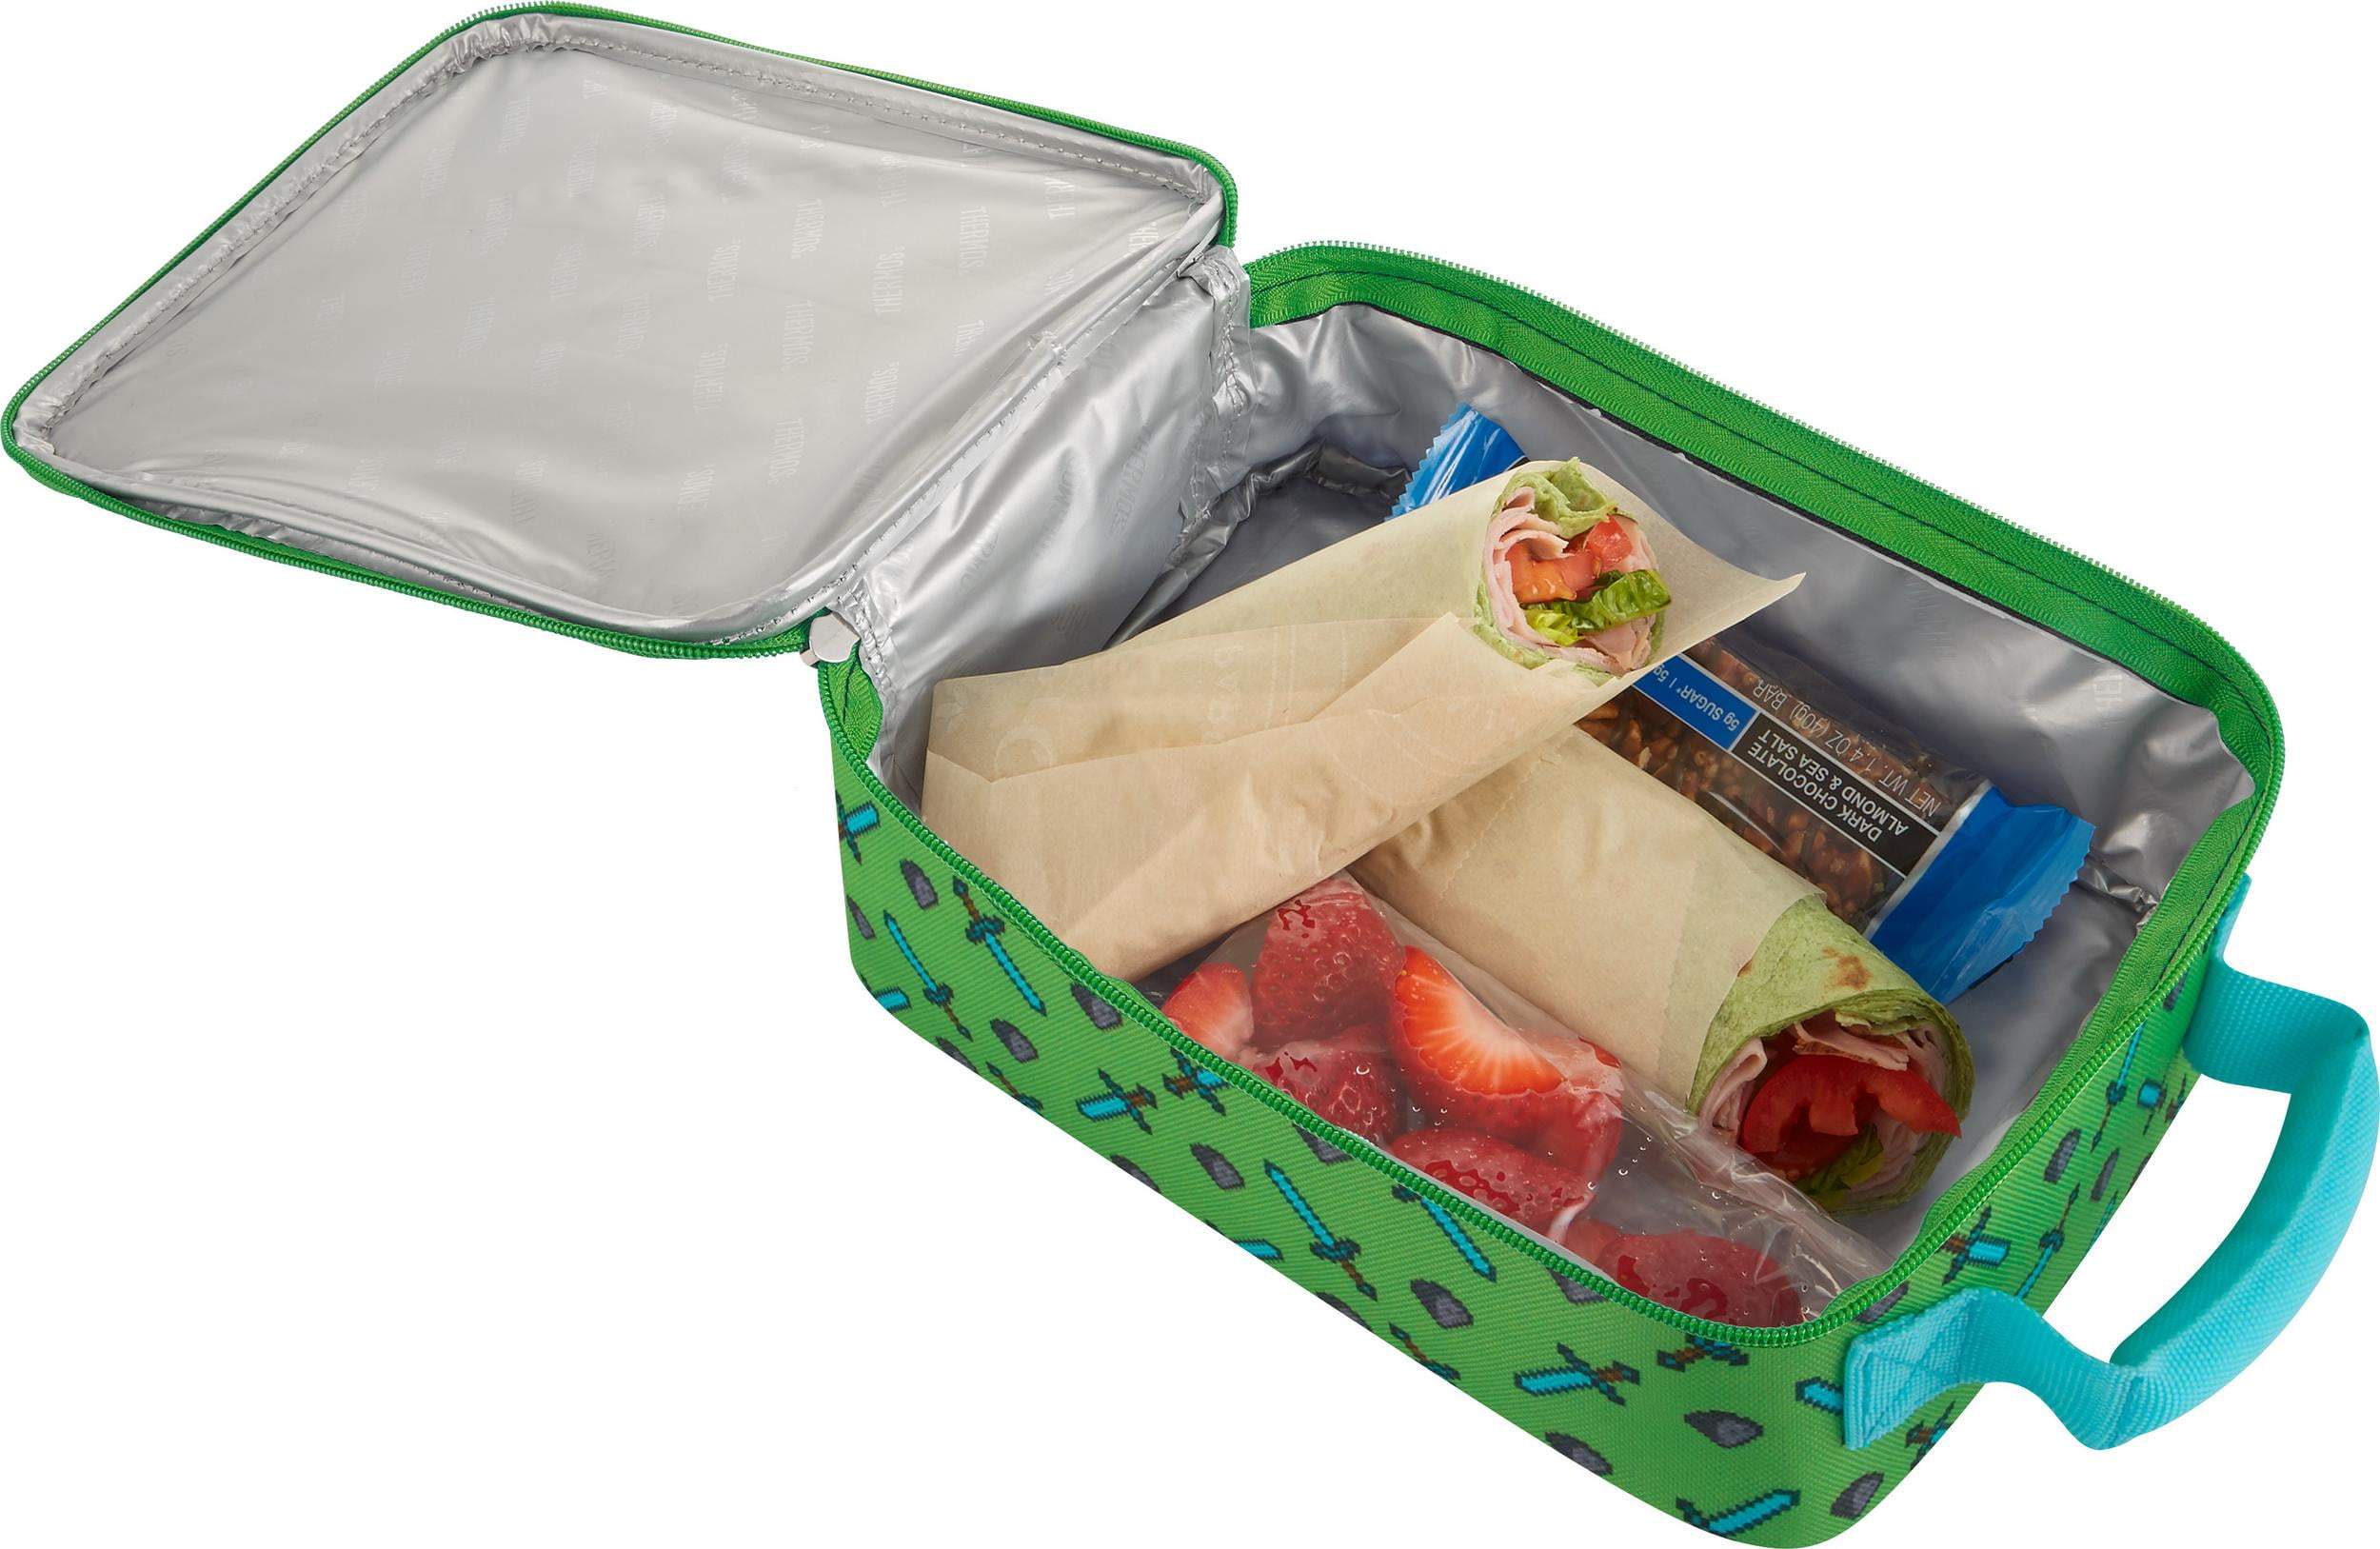 Skater Antibacterial Lunch Box For Children 360Ml Super Mario Boys Mad